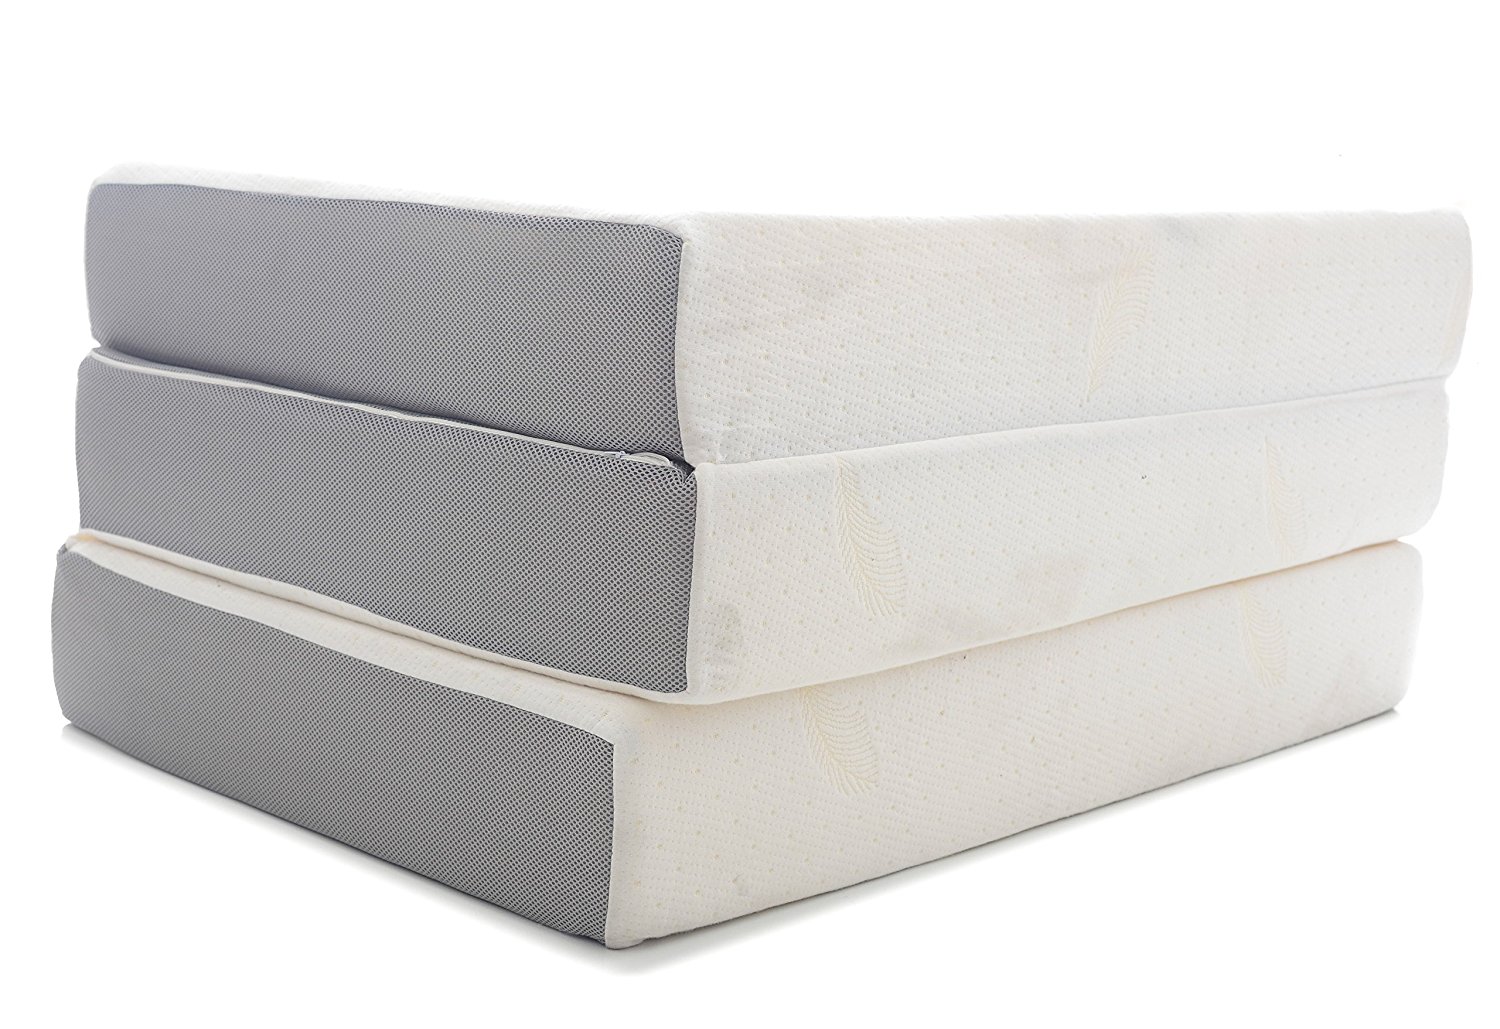 6 inch folding mattress twin xl